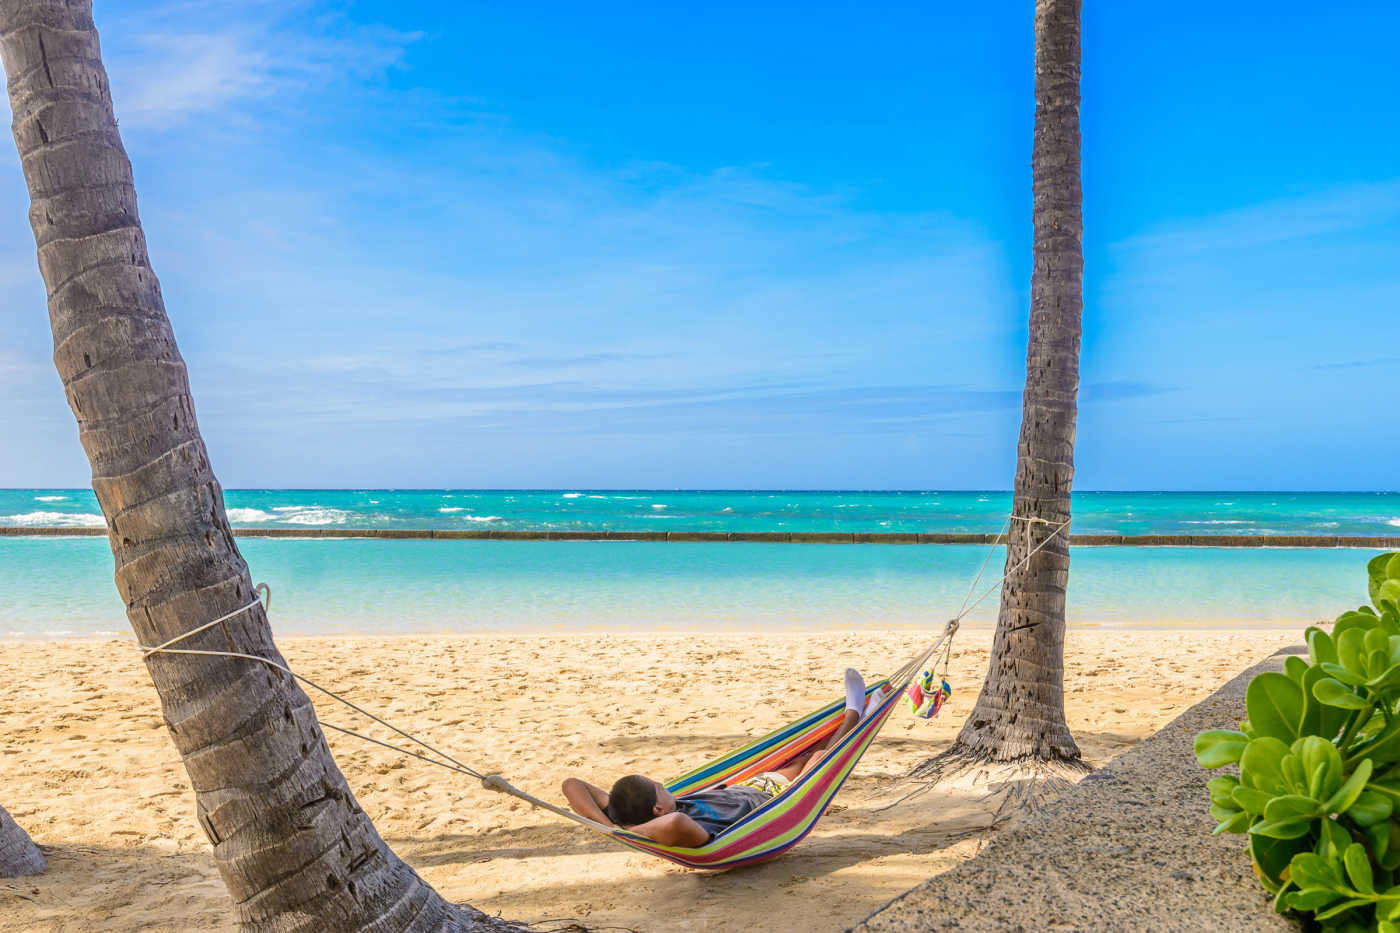 Oahu: Hilton Hawaiian Village® Waikiki Beach Resort Package, Deal